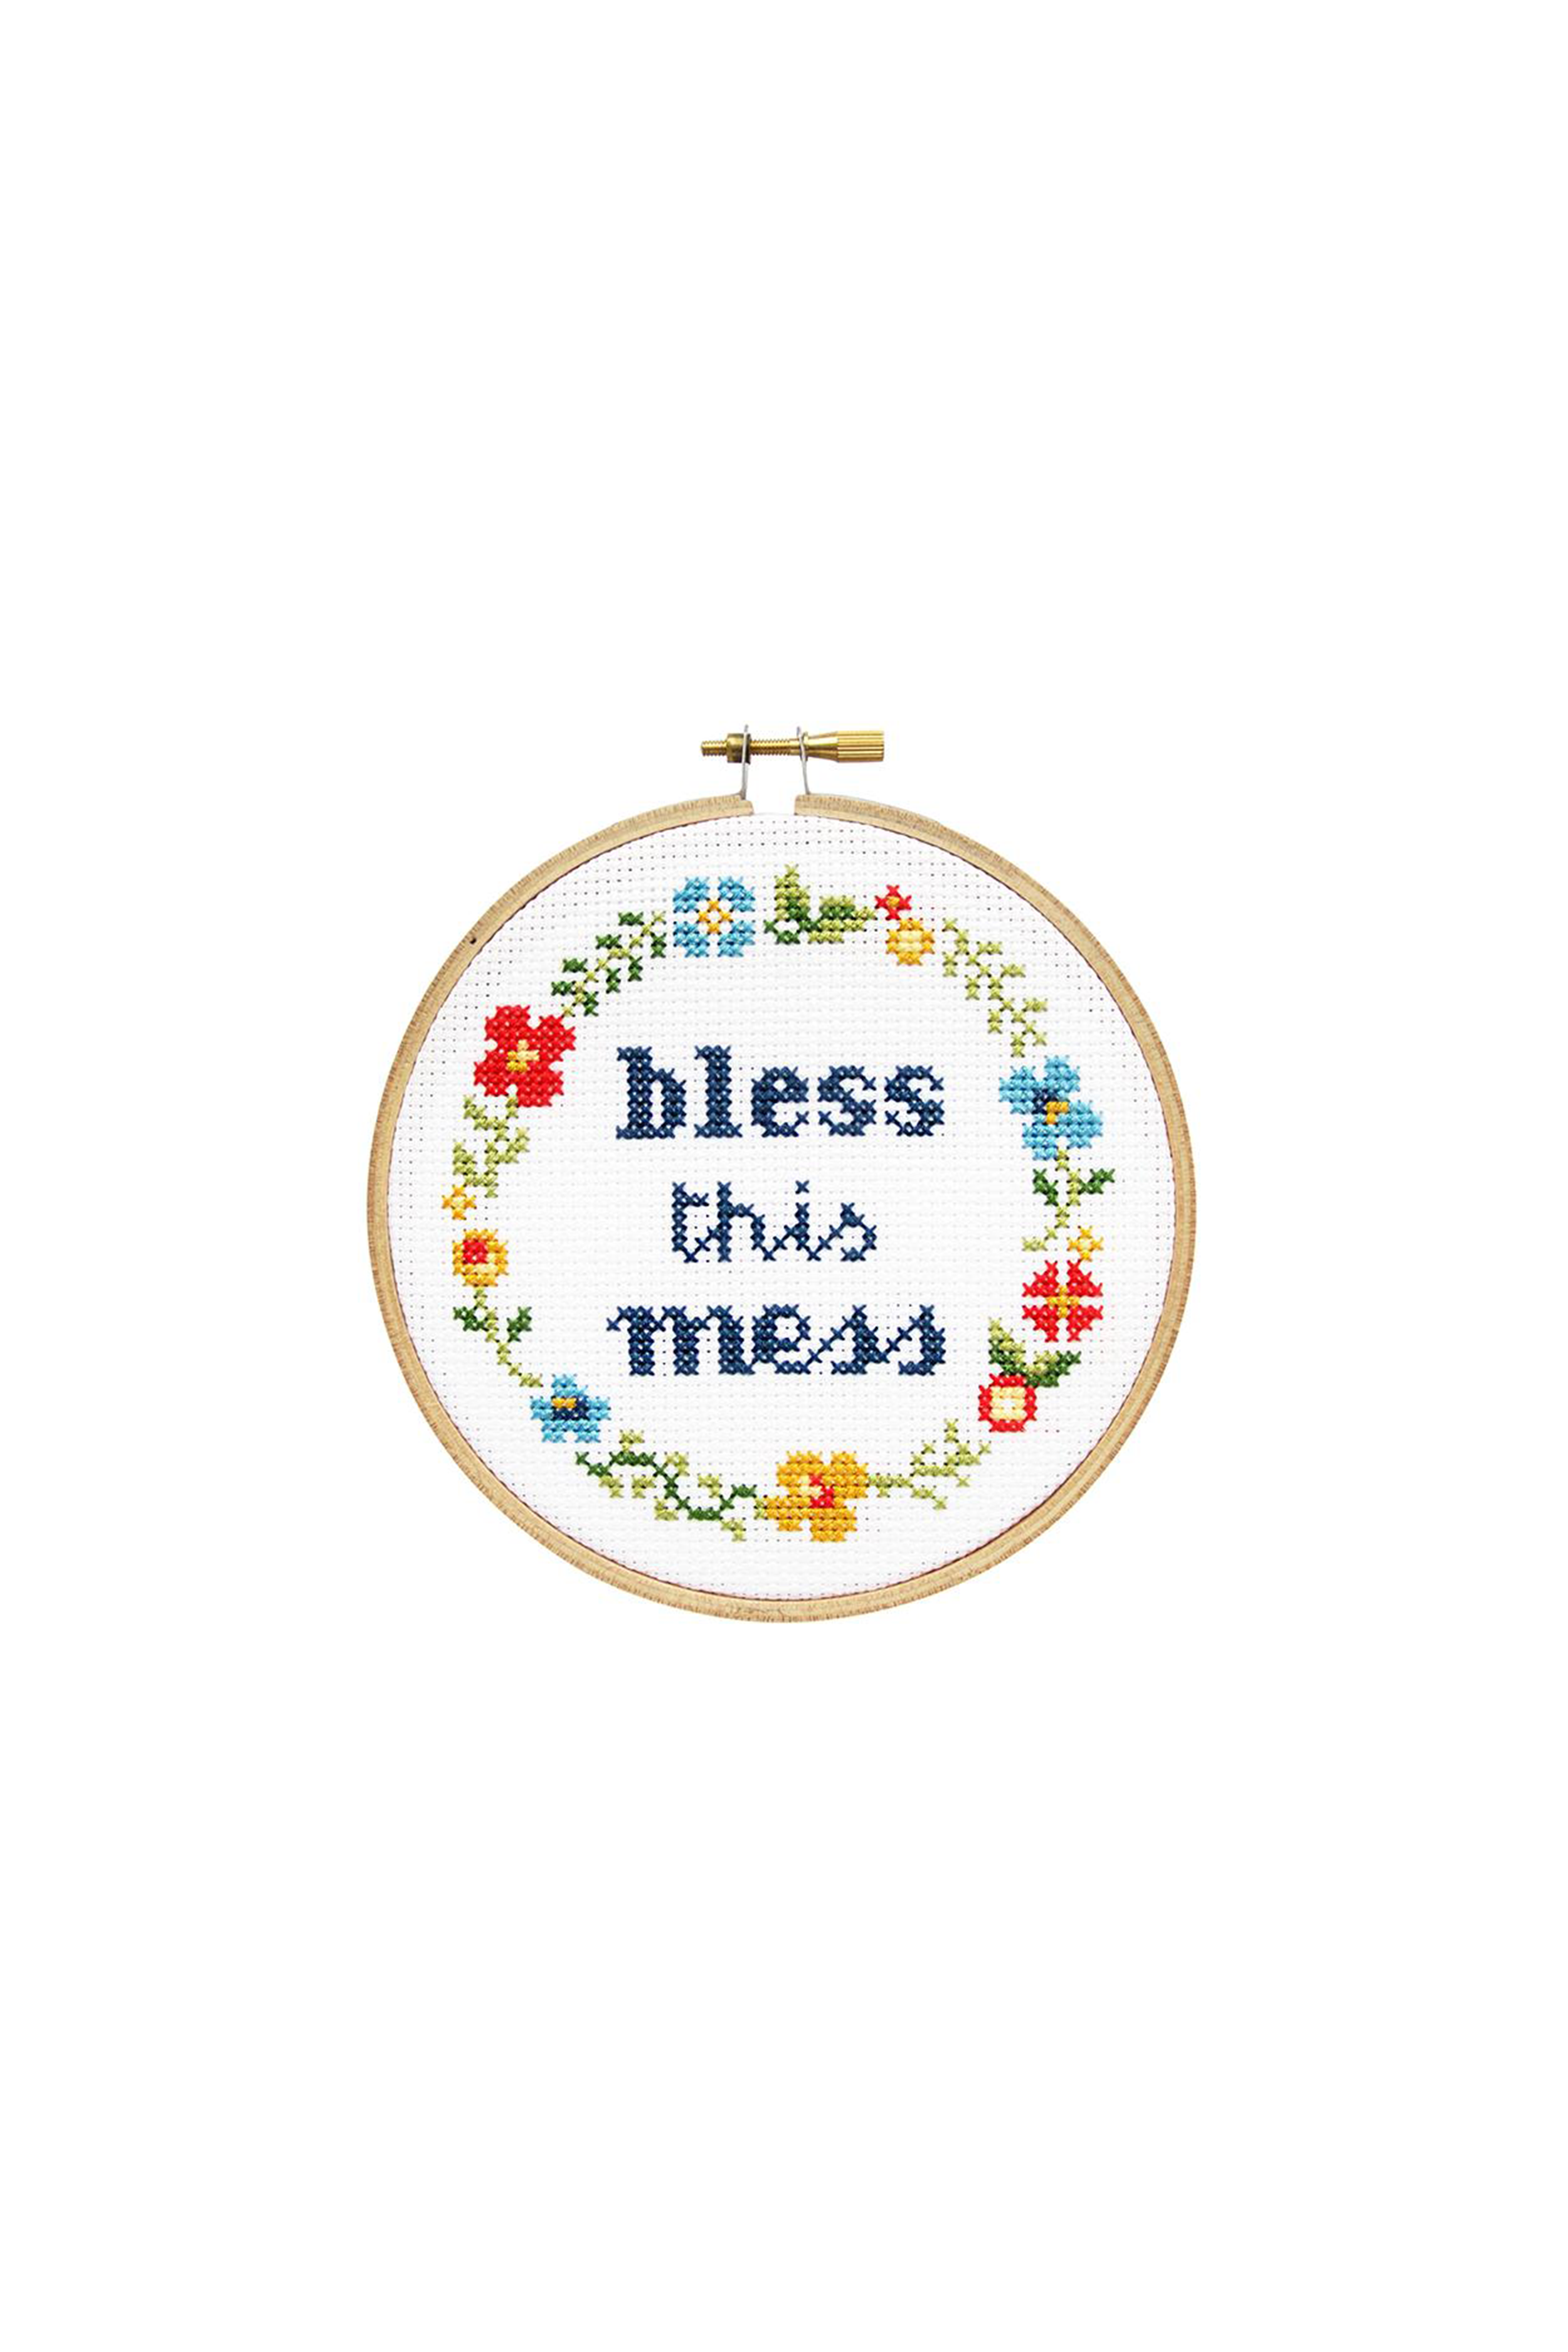 Bless This Mess DIY Cross Stitch Kit